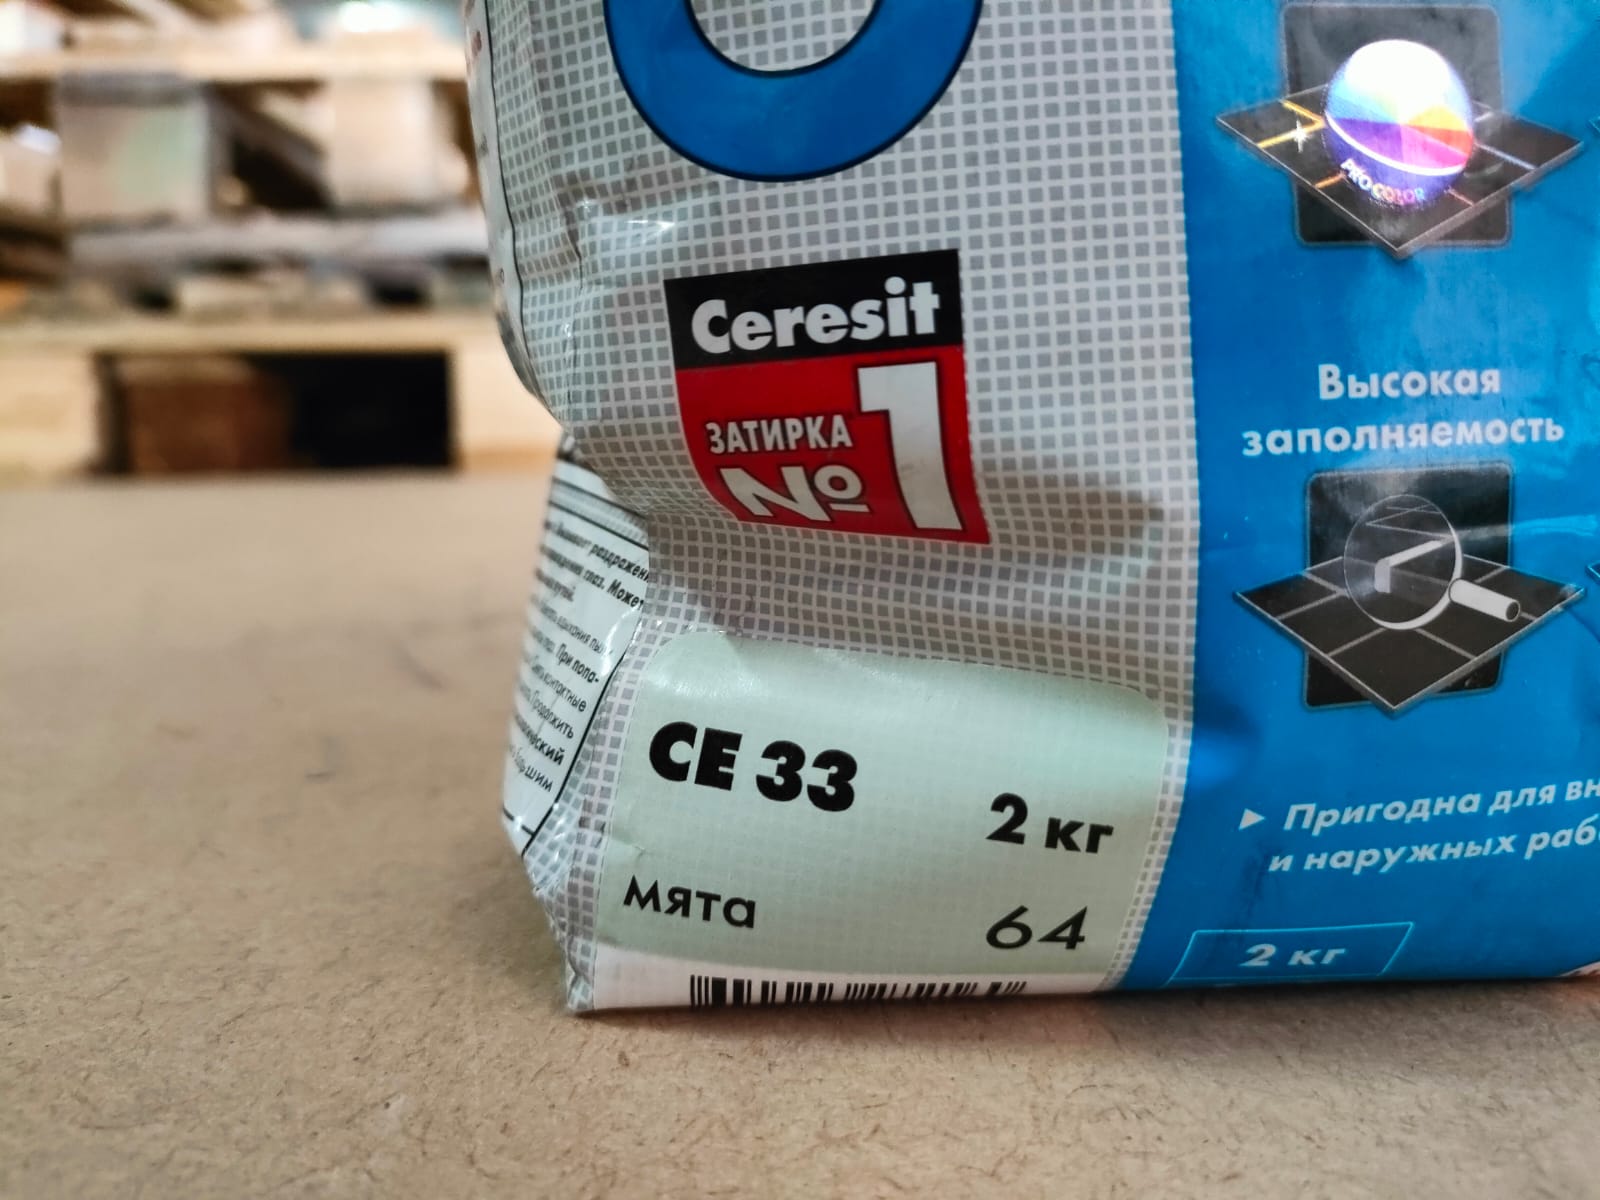 Затирка для узких швов Ceresit CE 33 Comfort, ширина шва 2-6 мм, 2 кг, цвет мята ДИСКОНТ